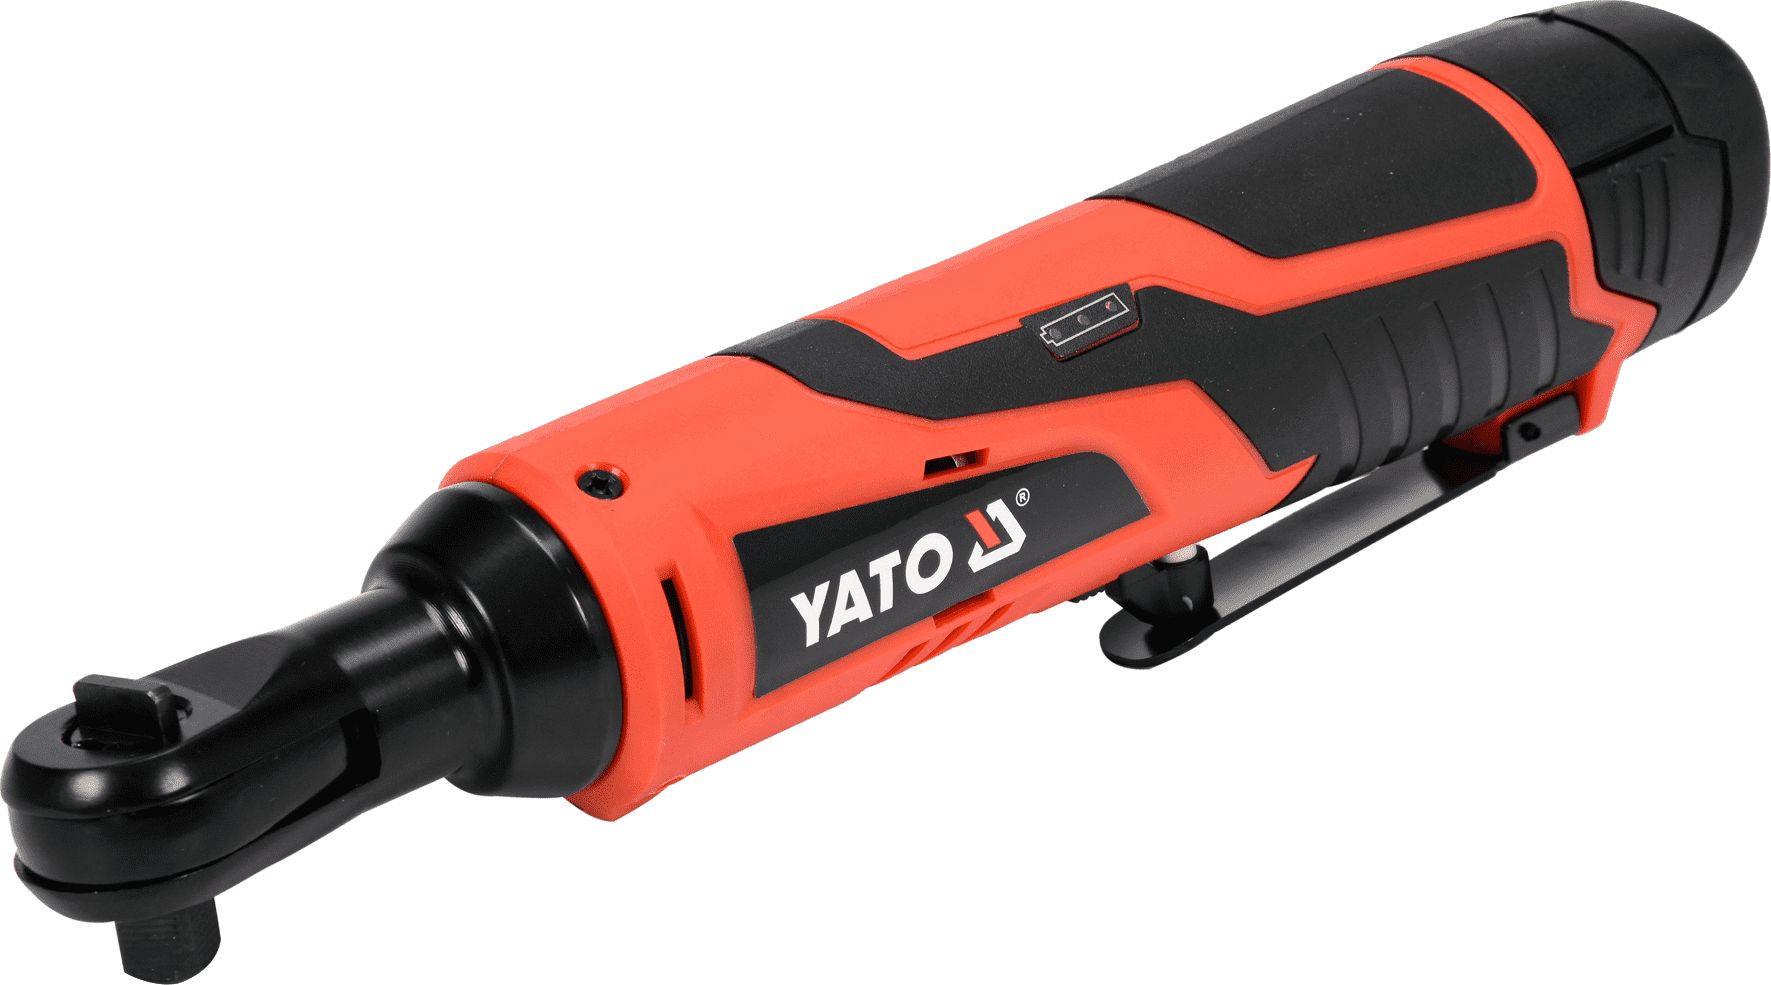 Yato right angle ratchet impact wrench 12V LI-ION (YT-82902)